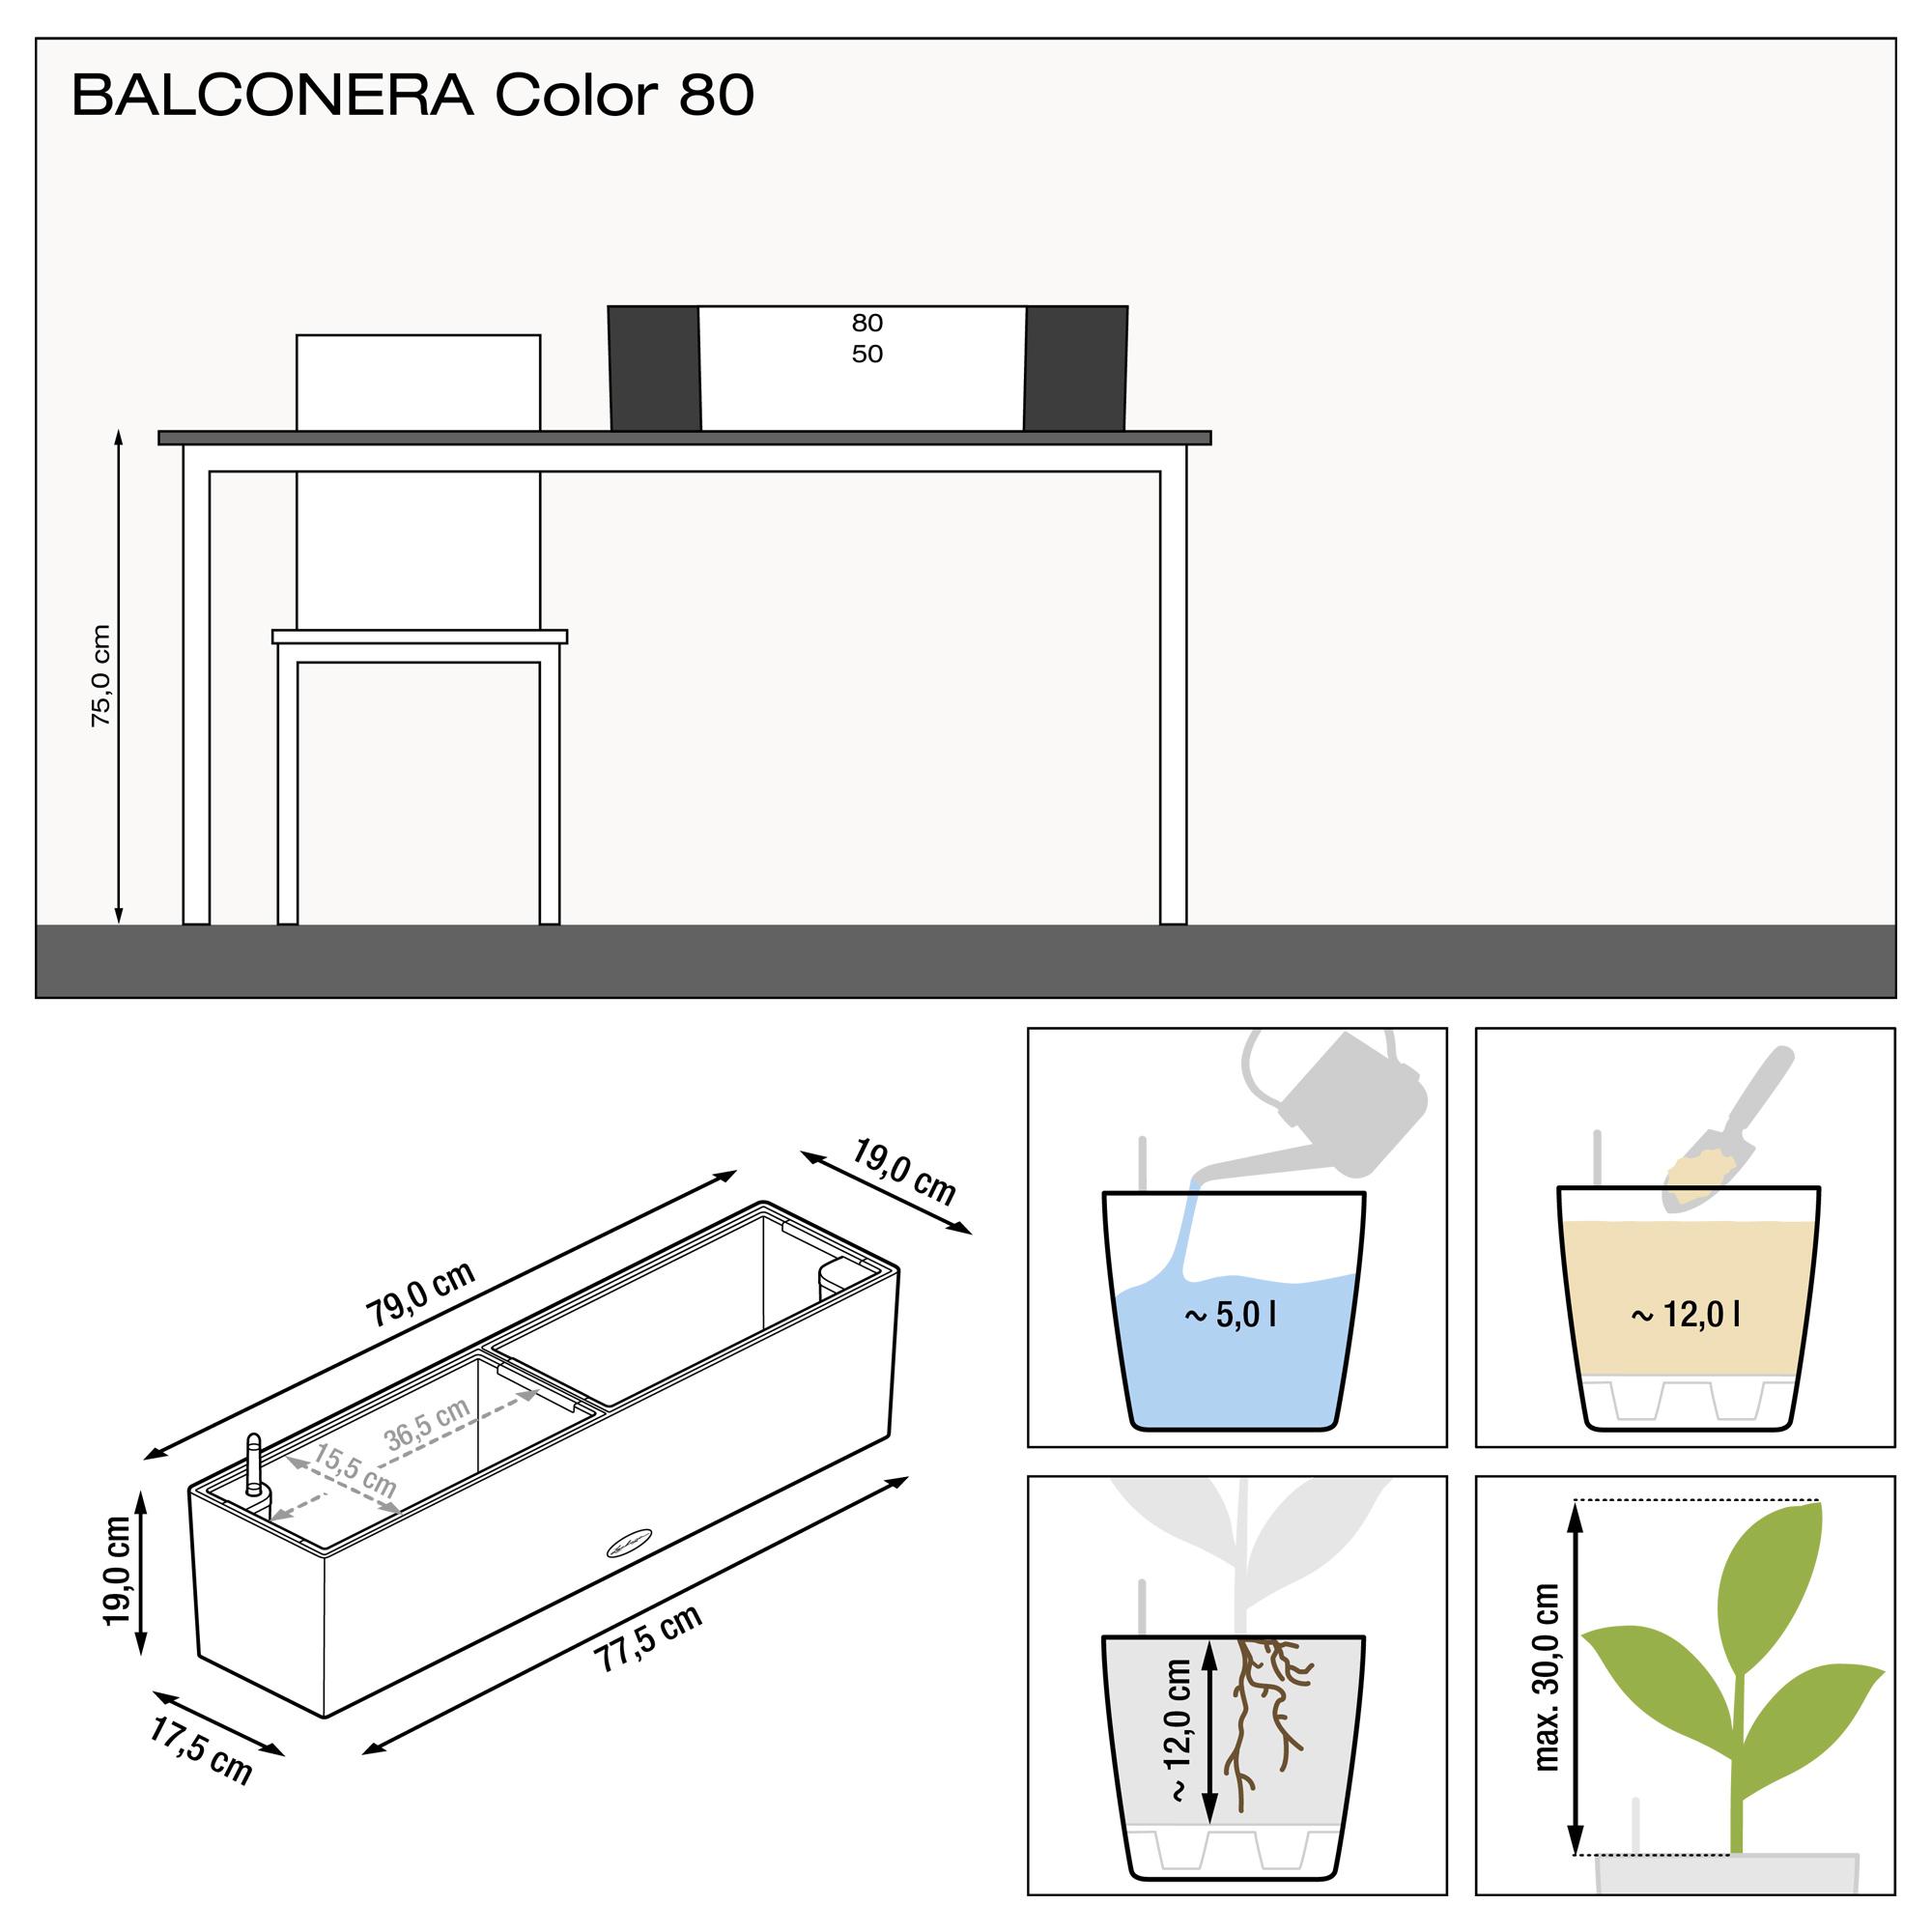 le_balconera-color80_product_addi_nz Thumb